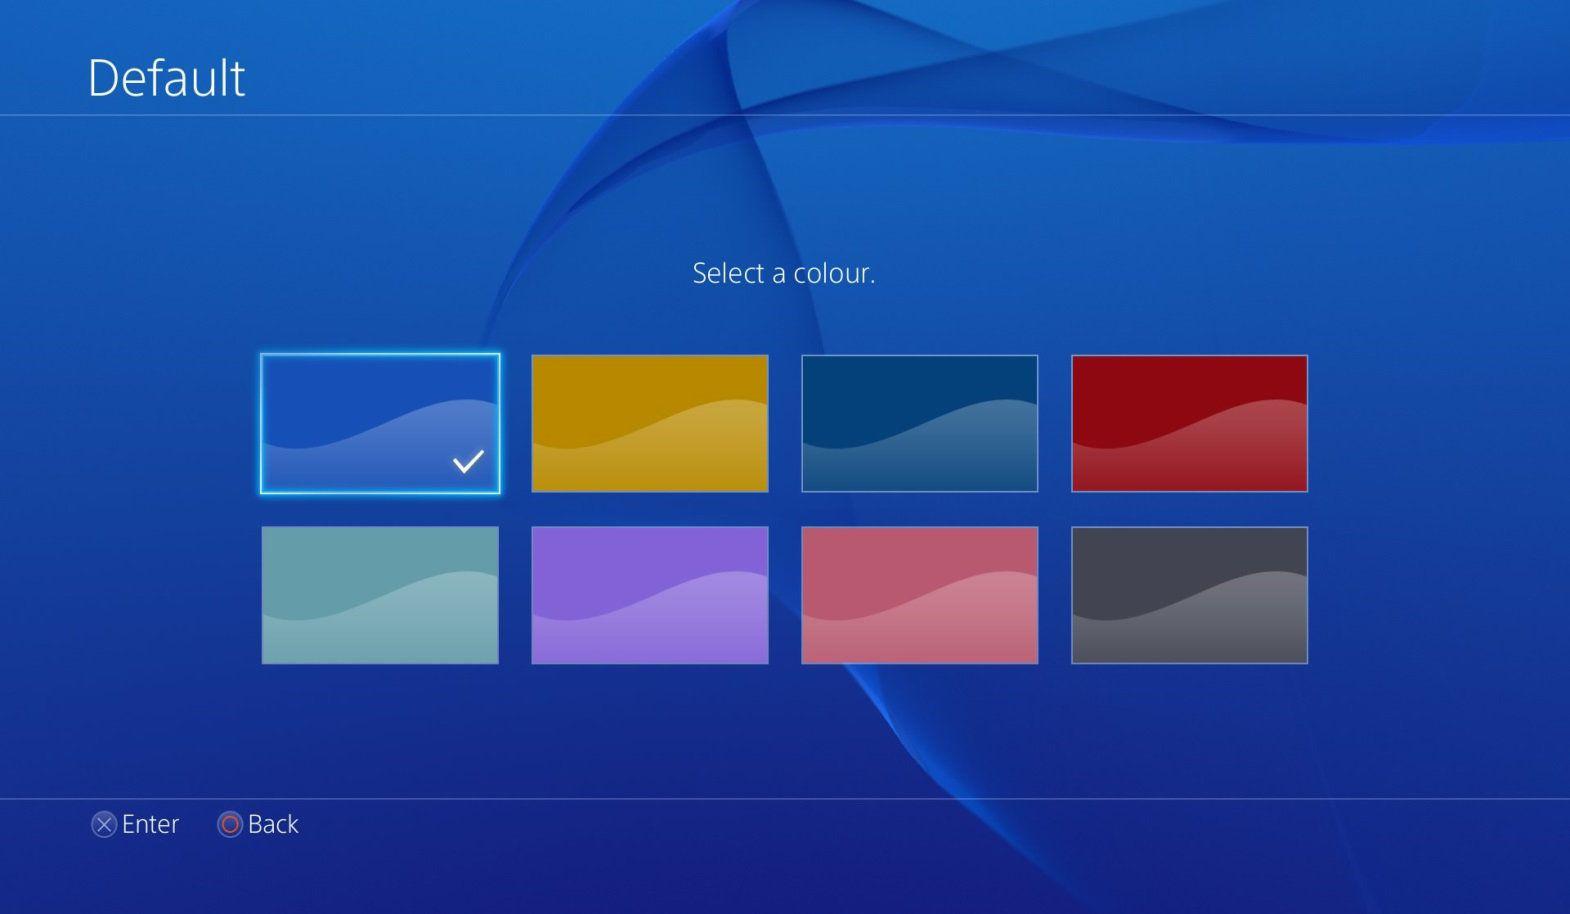 Custom Themes on PlayStation 4